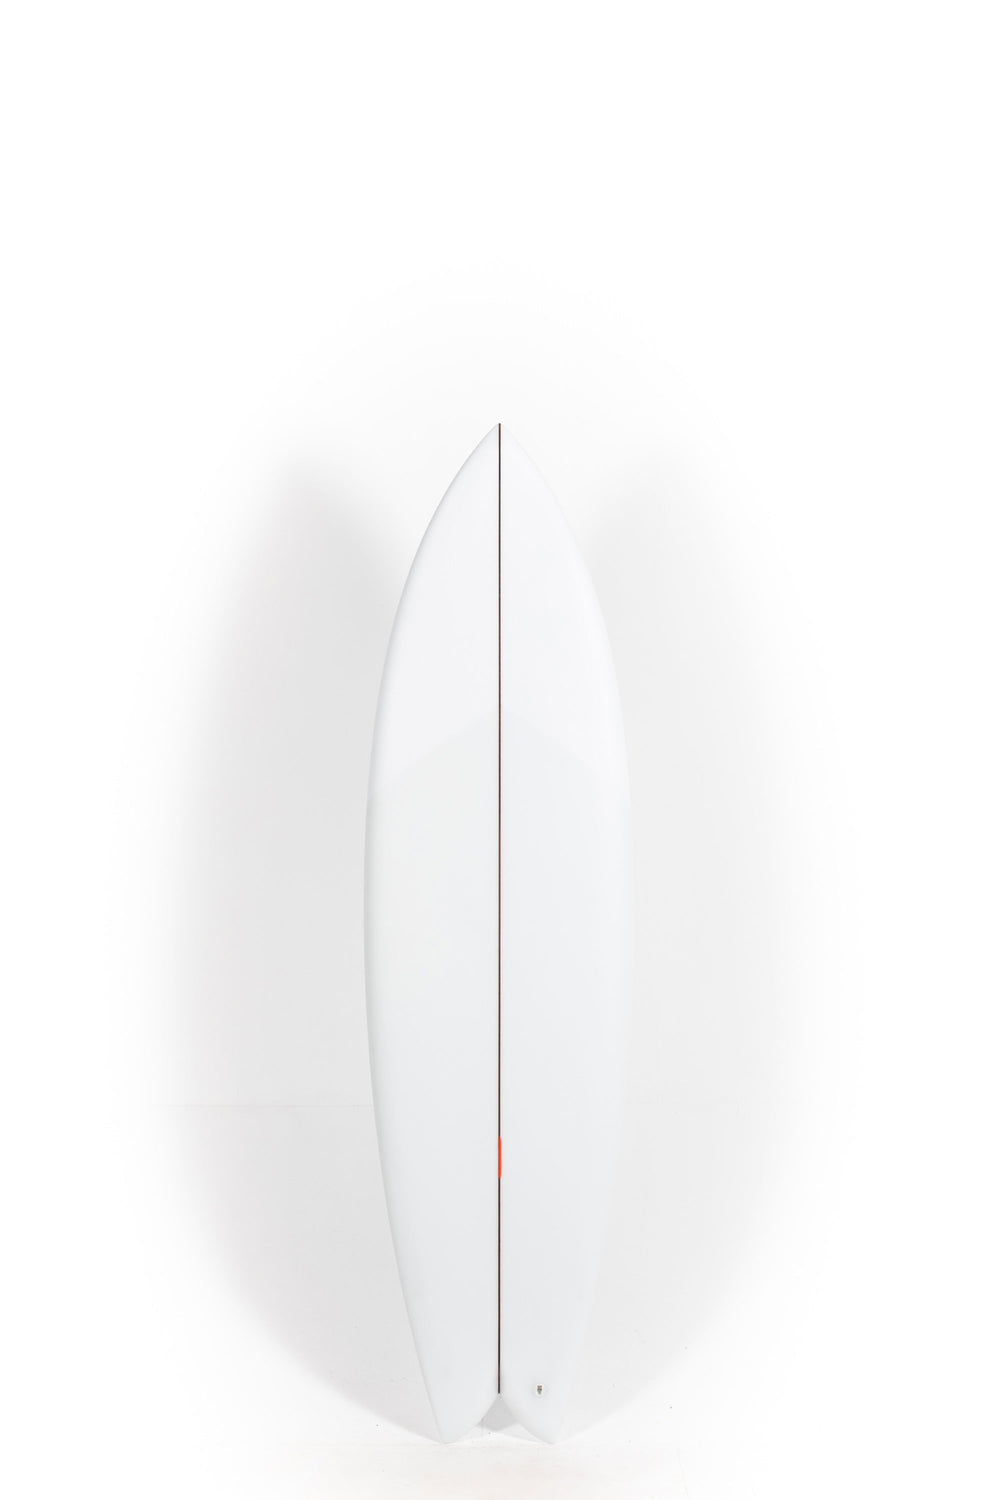 Pukas Surf Shop - Christenson Surfboards - NAUTILUS - 6'4